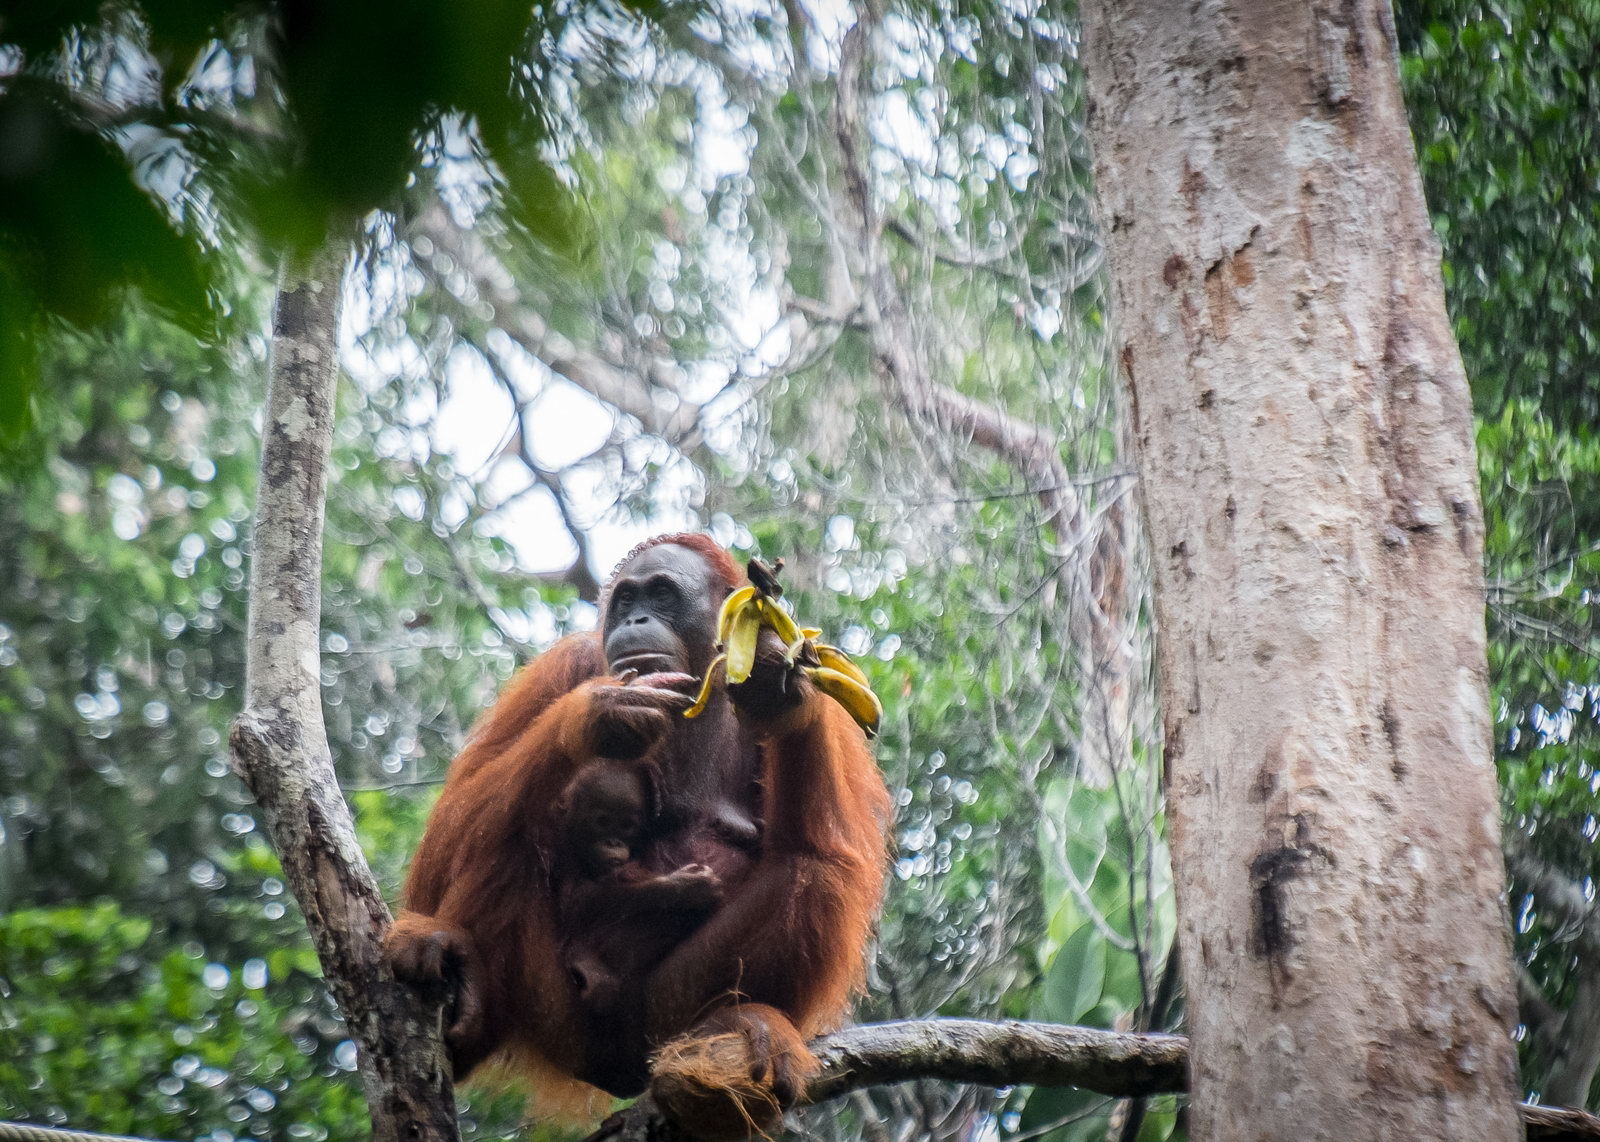 Jungle trekking to find orangutans in Malaysia - NZ Herald